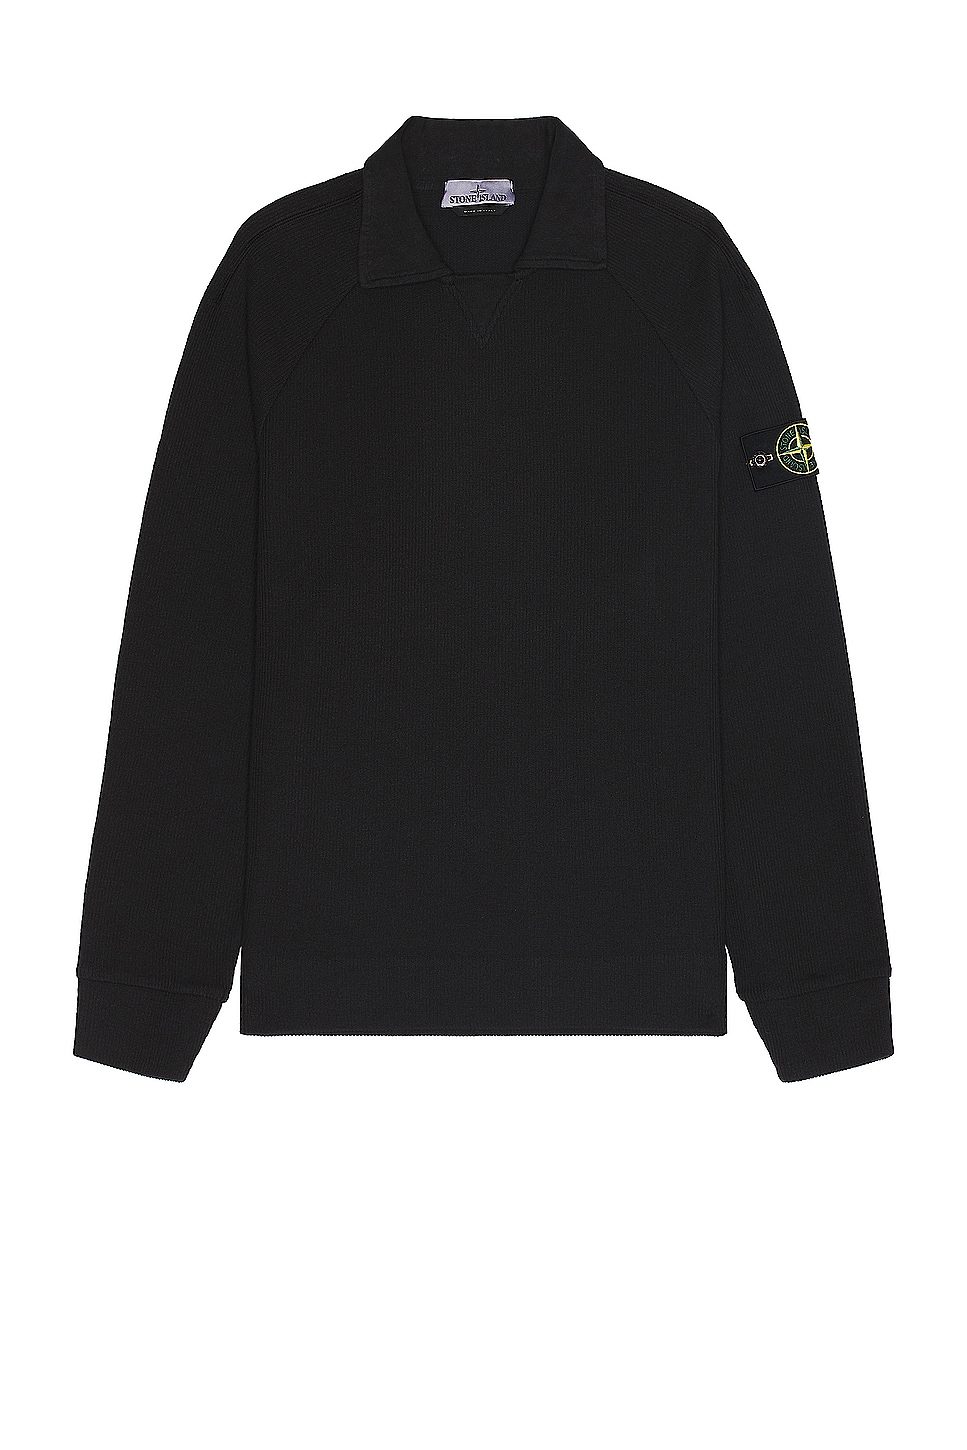 Image 1 of Stone Island Polo Sweatshirt in Black